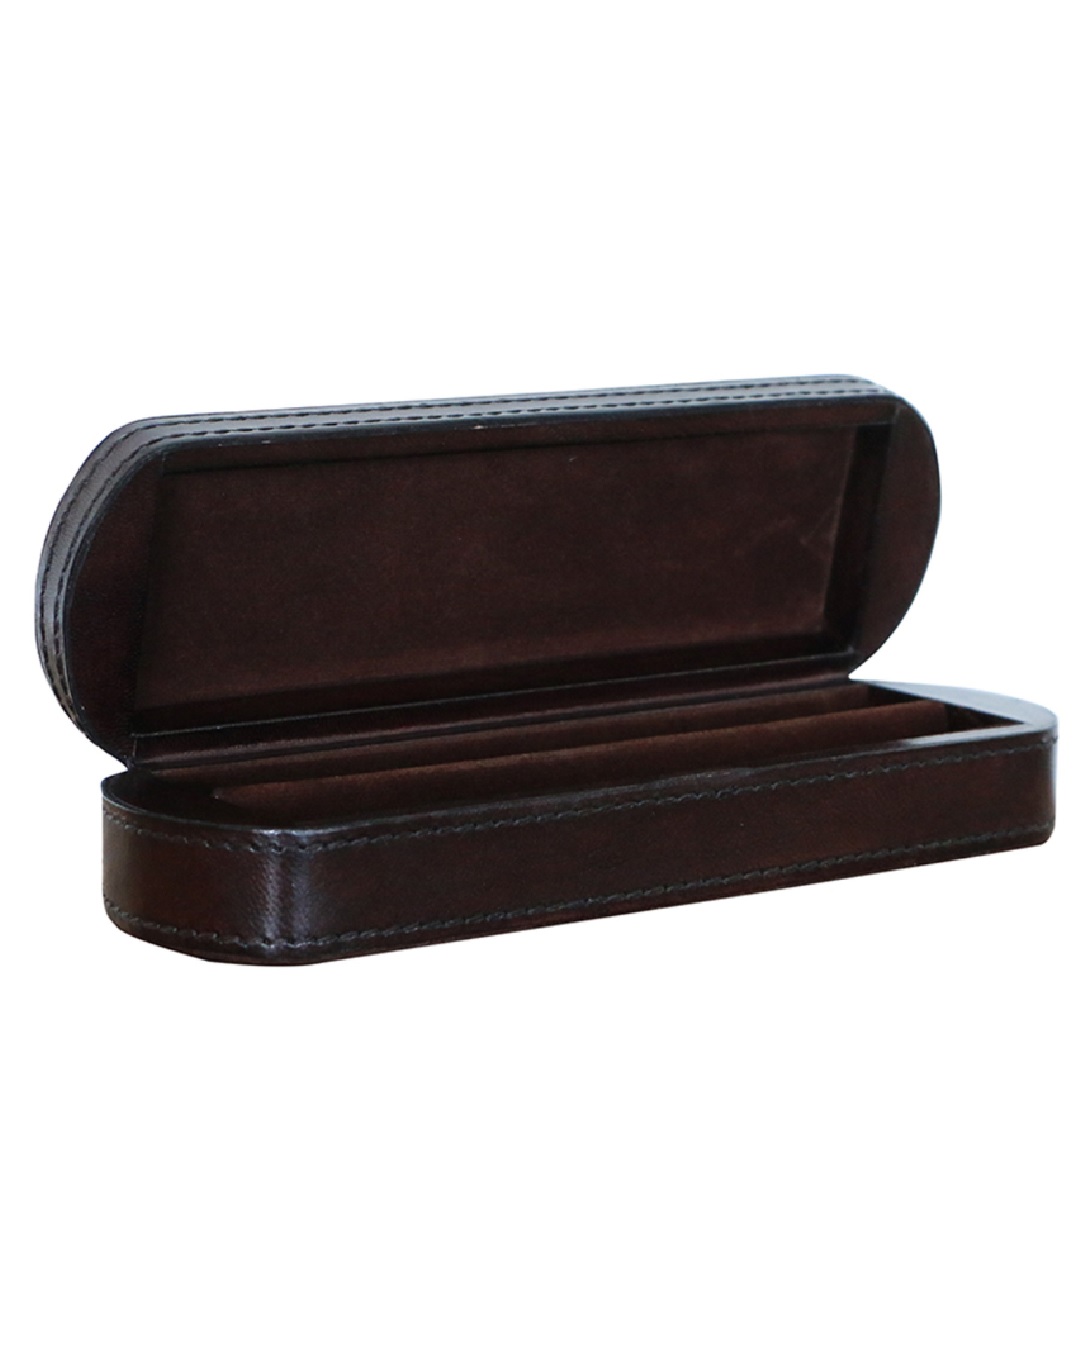 Leather pen or cigar case